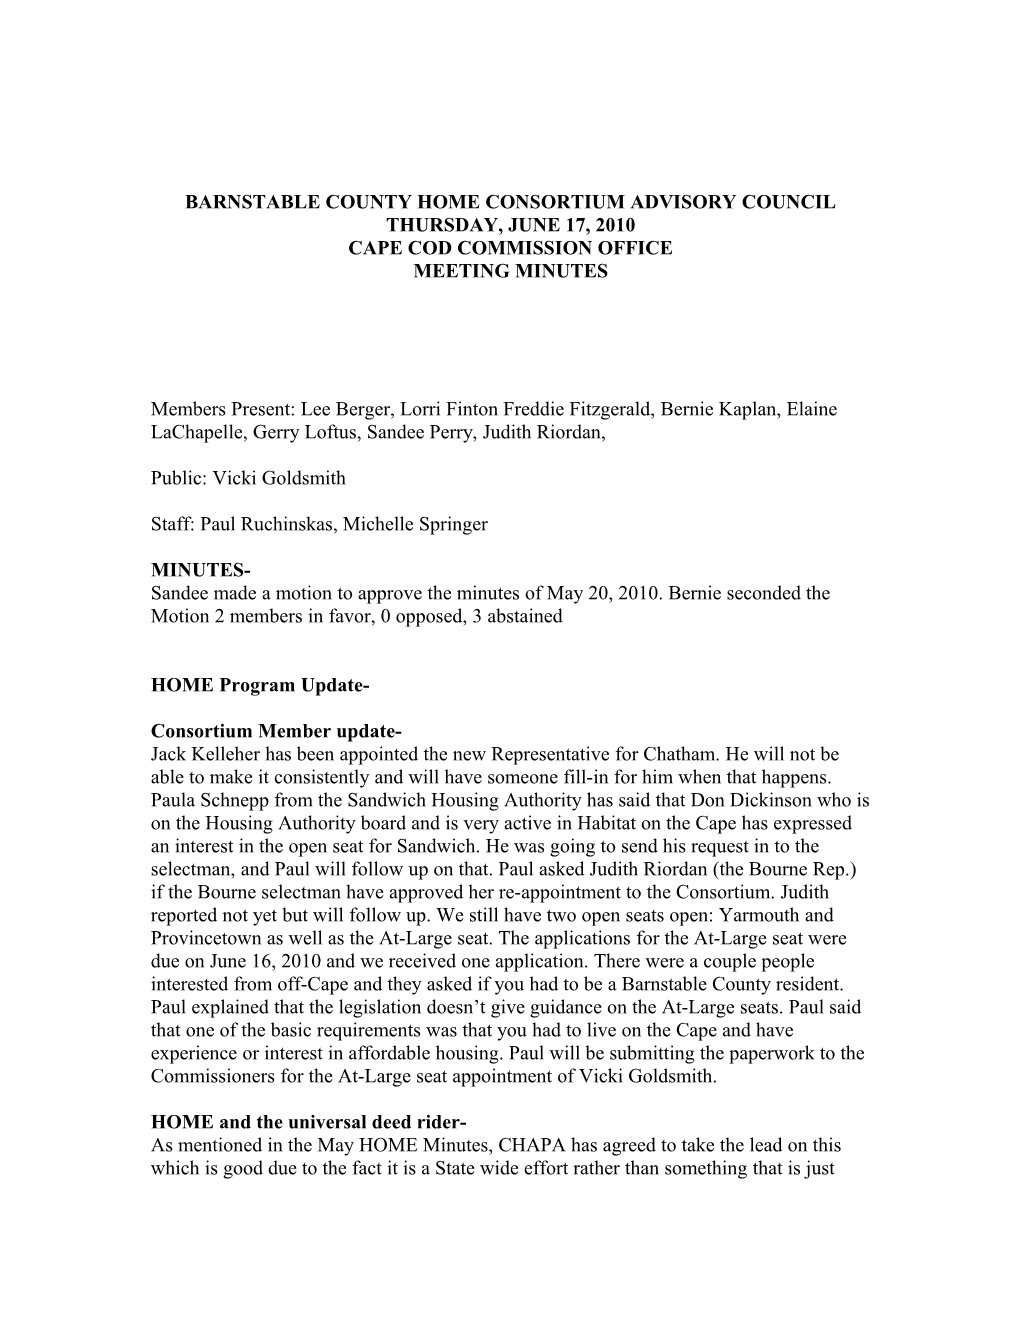 Barnstable County Home Consortium Advisory Council